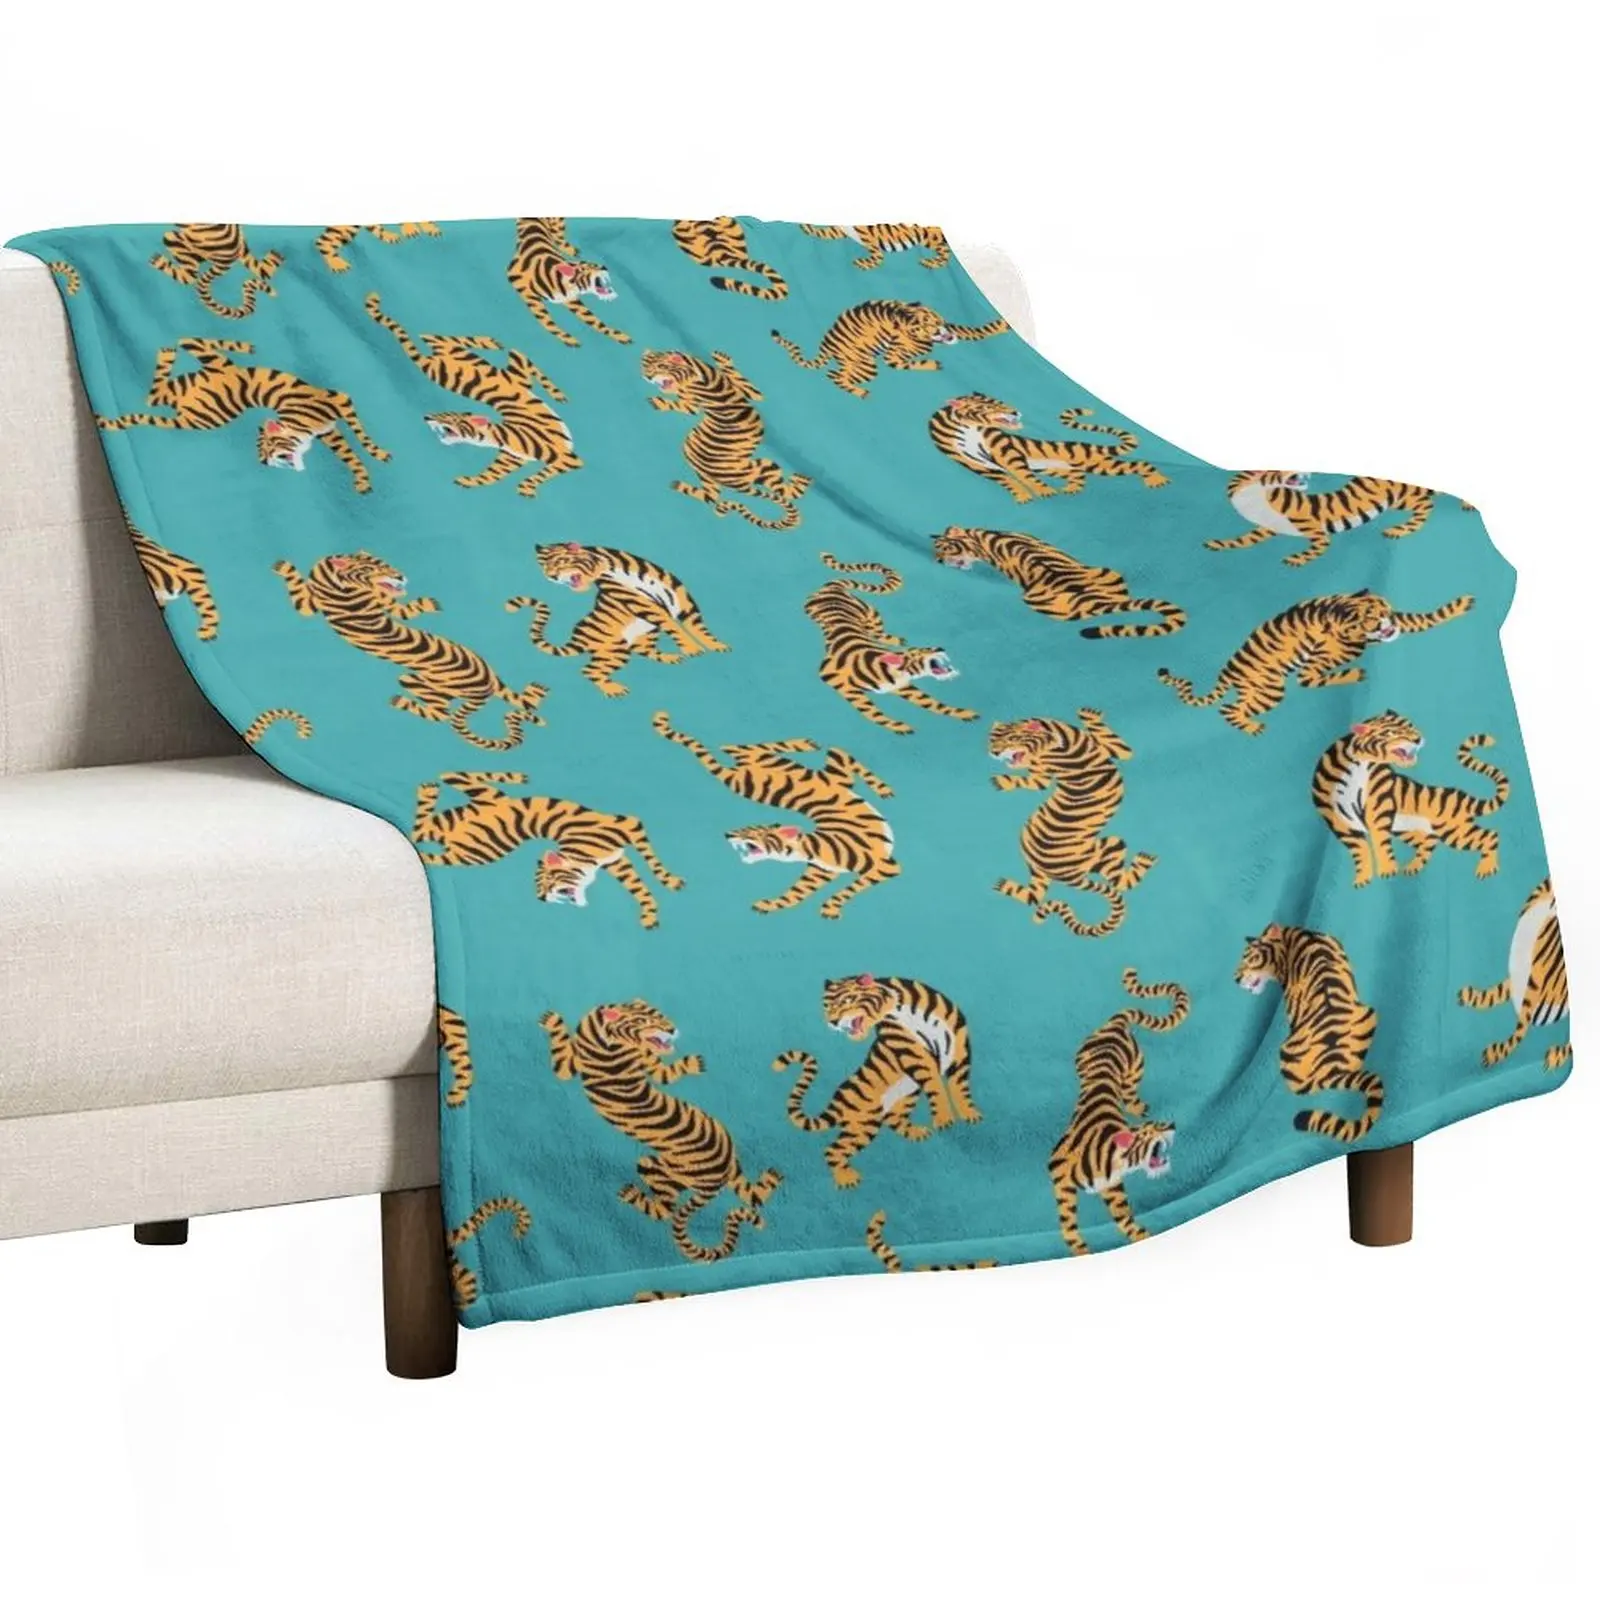 

New Bengal tigers Throw Blanket Thin Blanket fluffy blanket Blanket Sofa